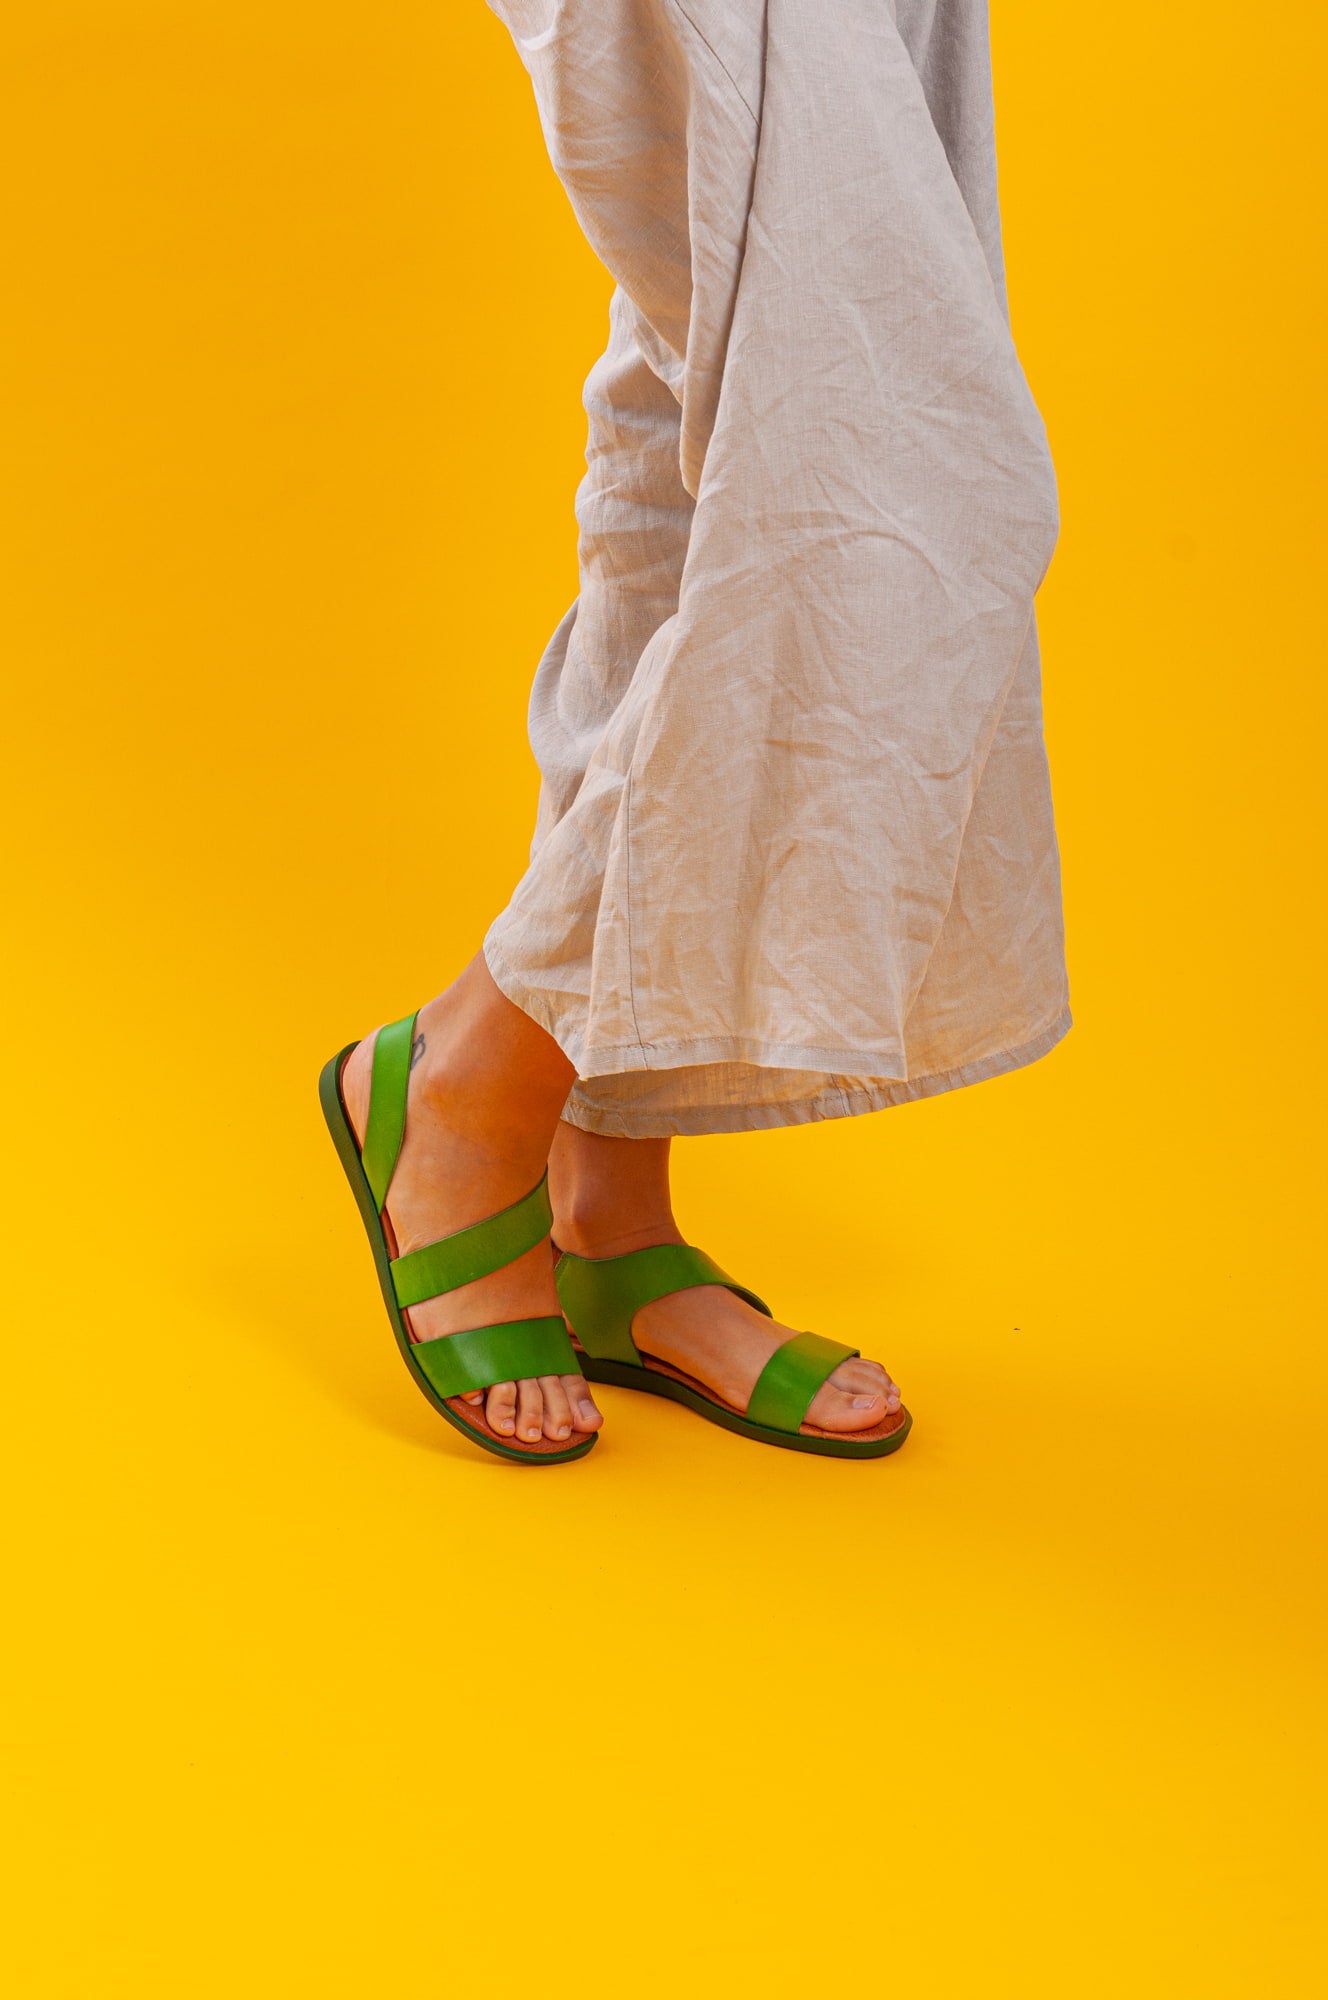 Sandalias planas de mujer para uso diario. Sandalias planas cómodas y ligeras.